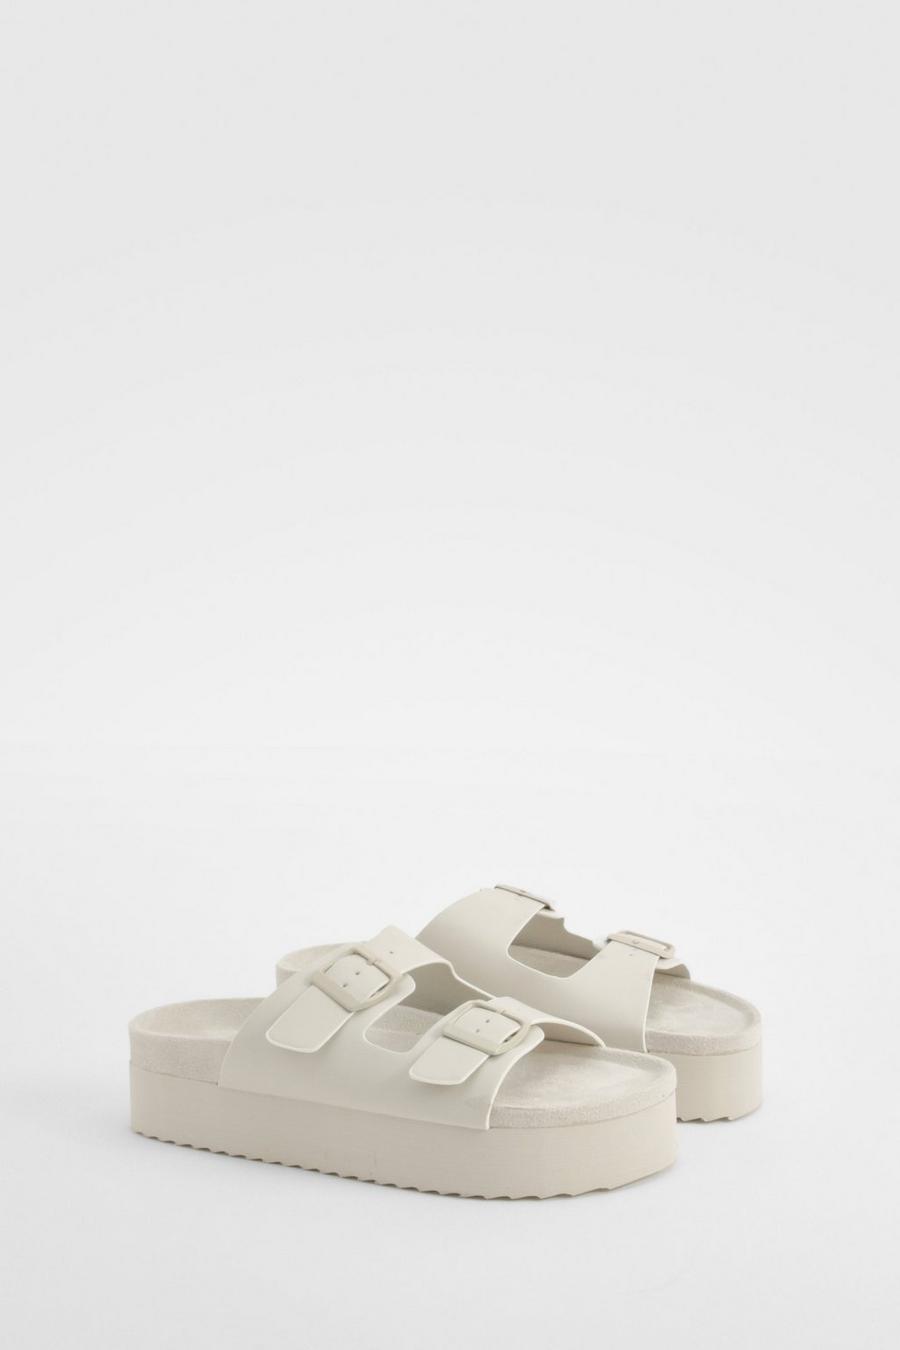 White Clergerie 90mm heeled sandals    